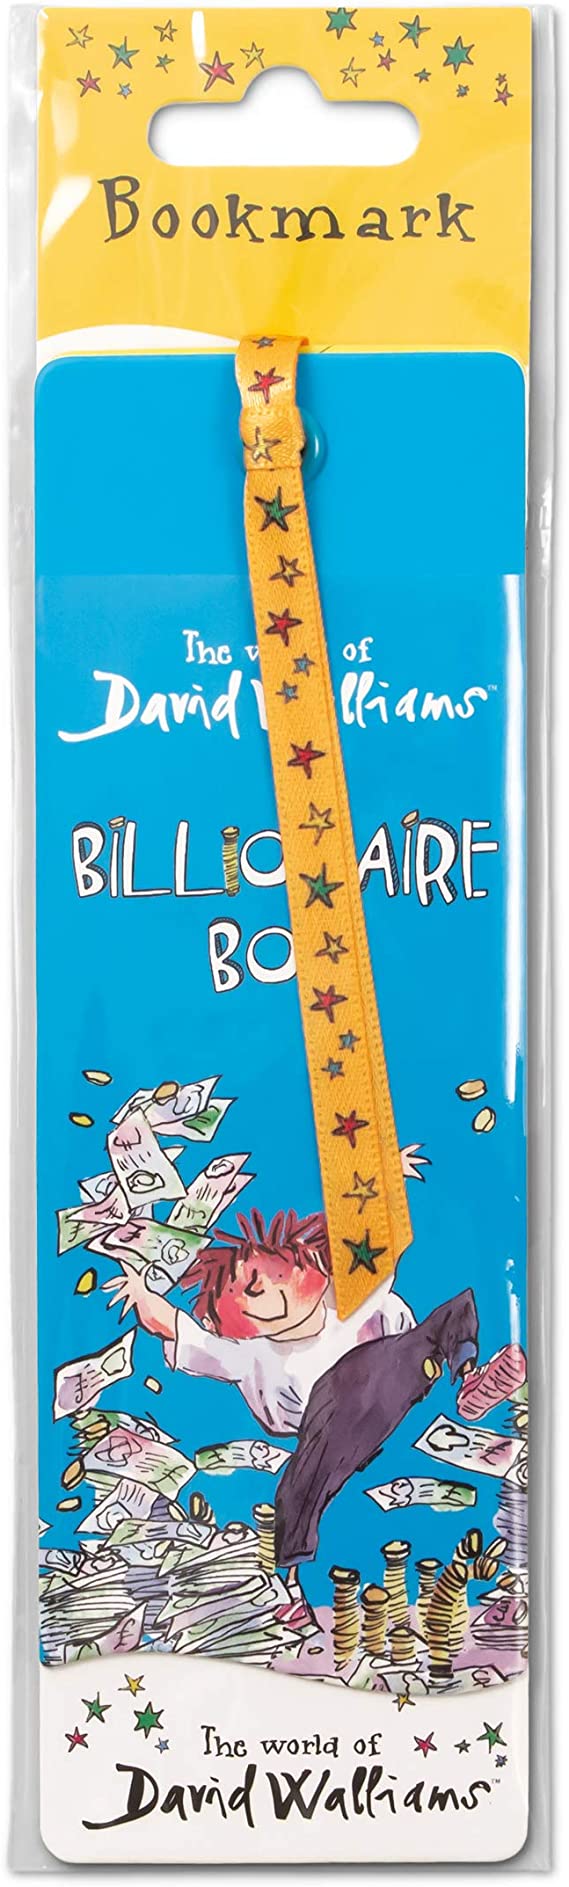 David Walliams Billionaire Boy Bookmark